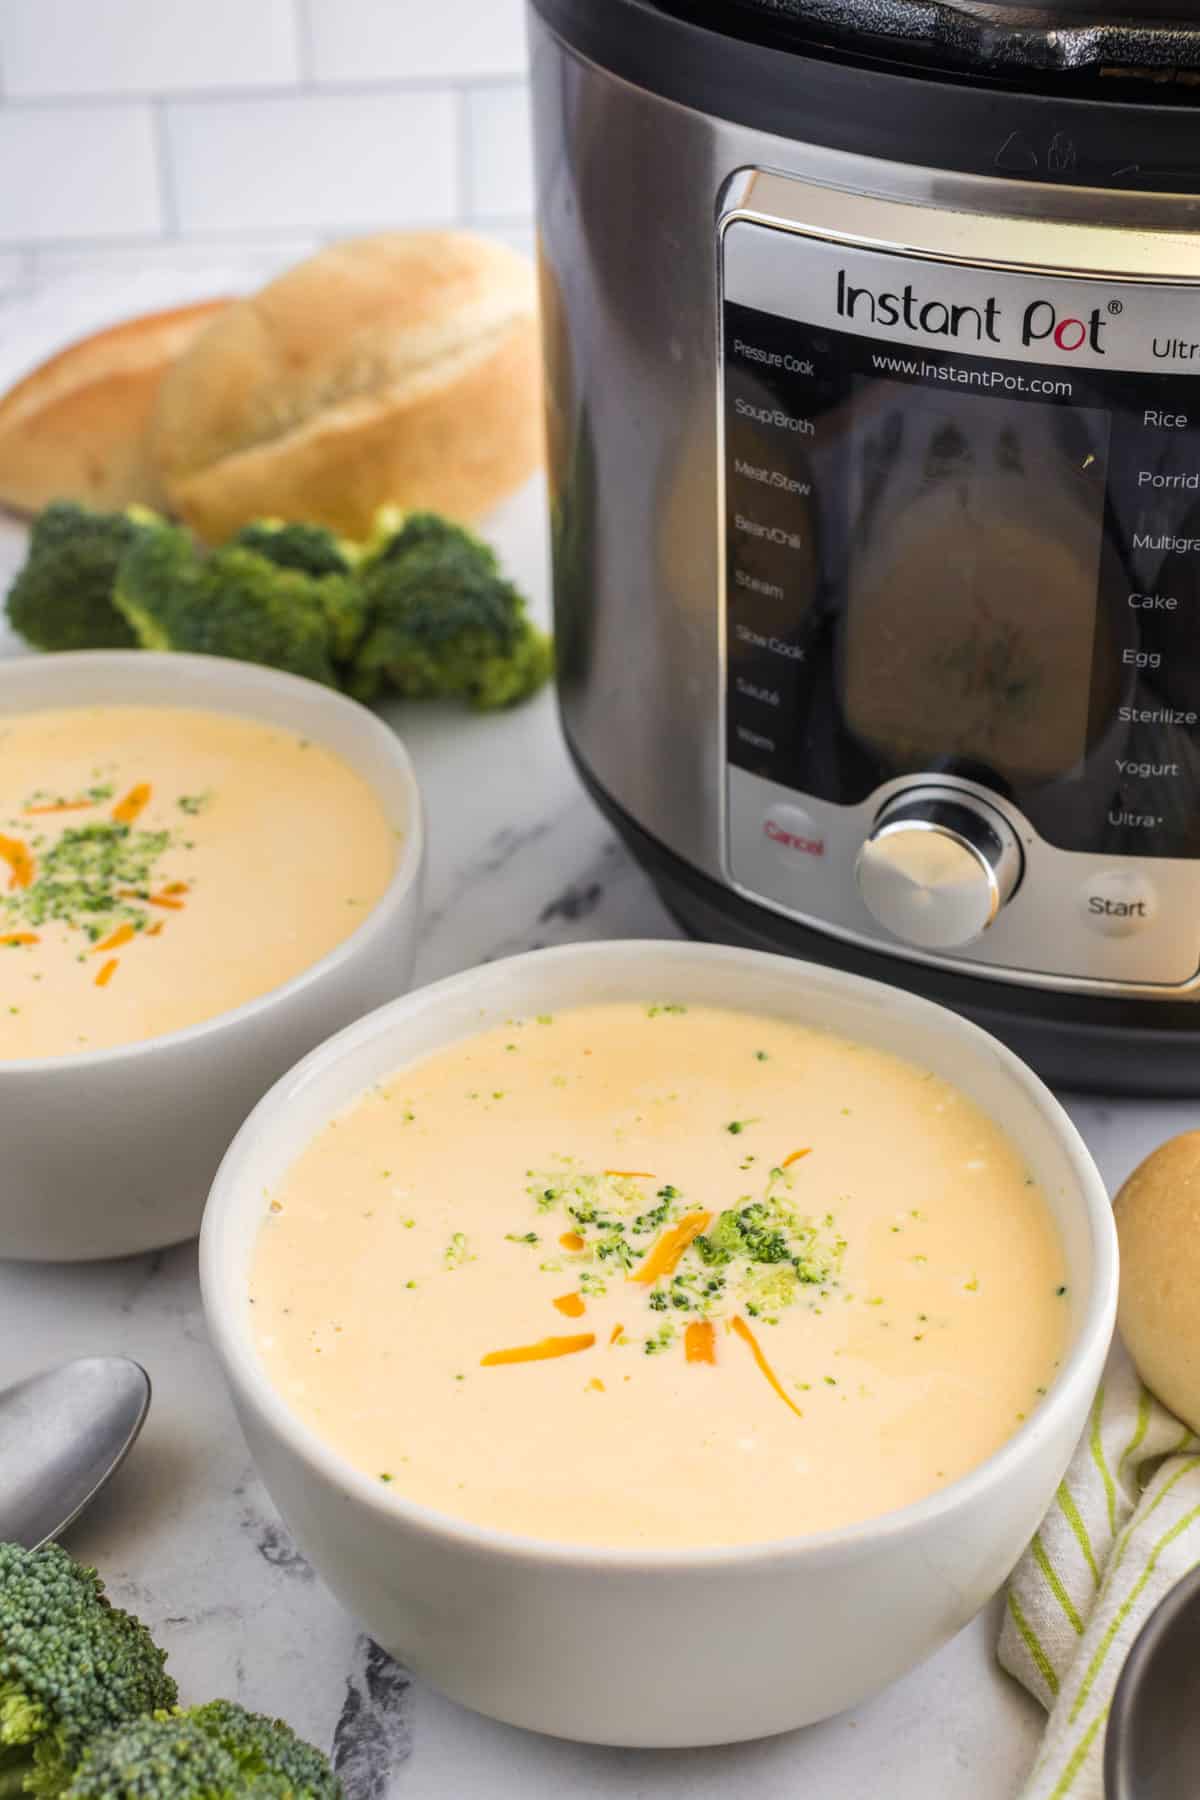 Panera’s Copycat Broccoli and Cheddar Instant Pot Soup